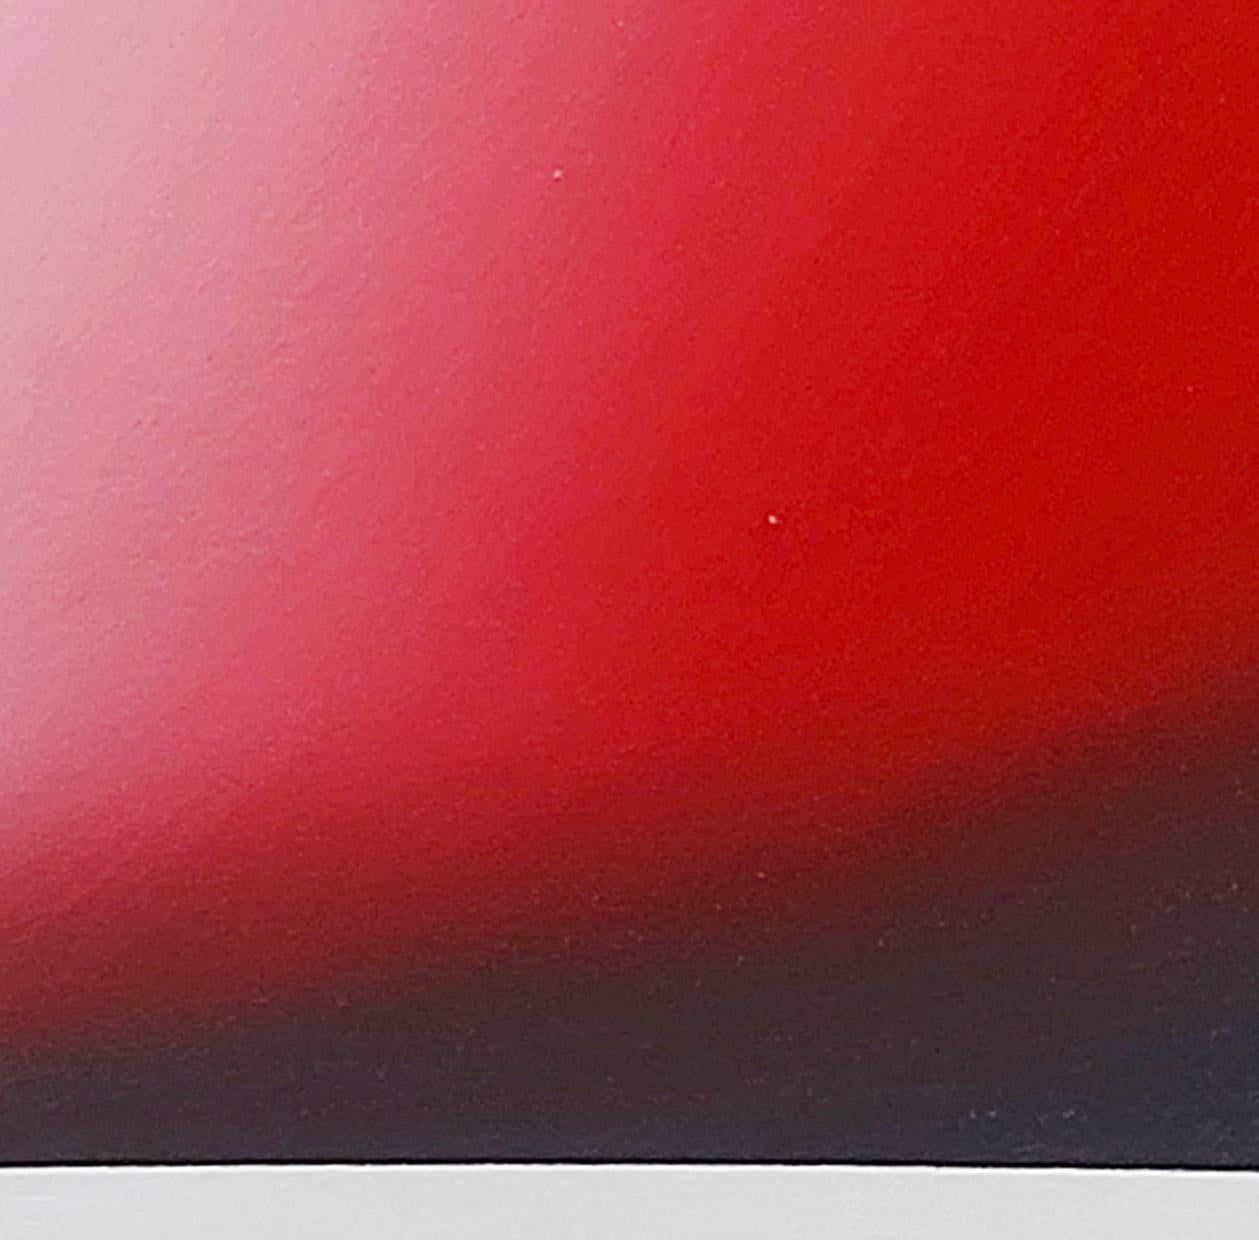 Herramienta en Rojo. Aus der Serie The Composition with Tools (Abstrakt), Painting, von Jose Ricardo Contreras Gonzalez